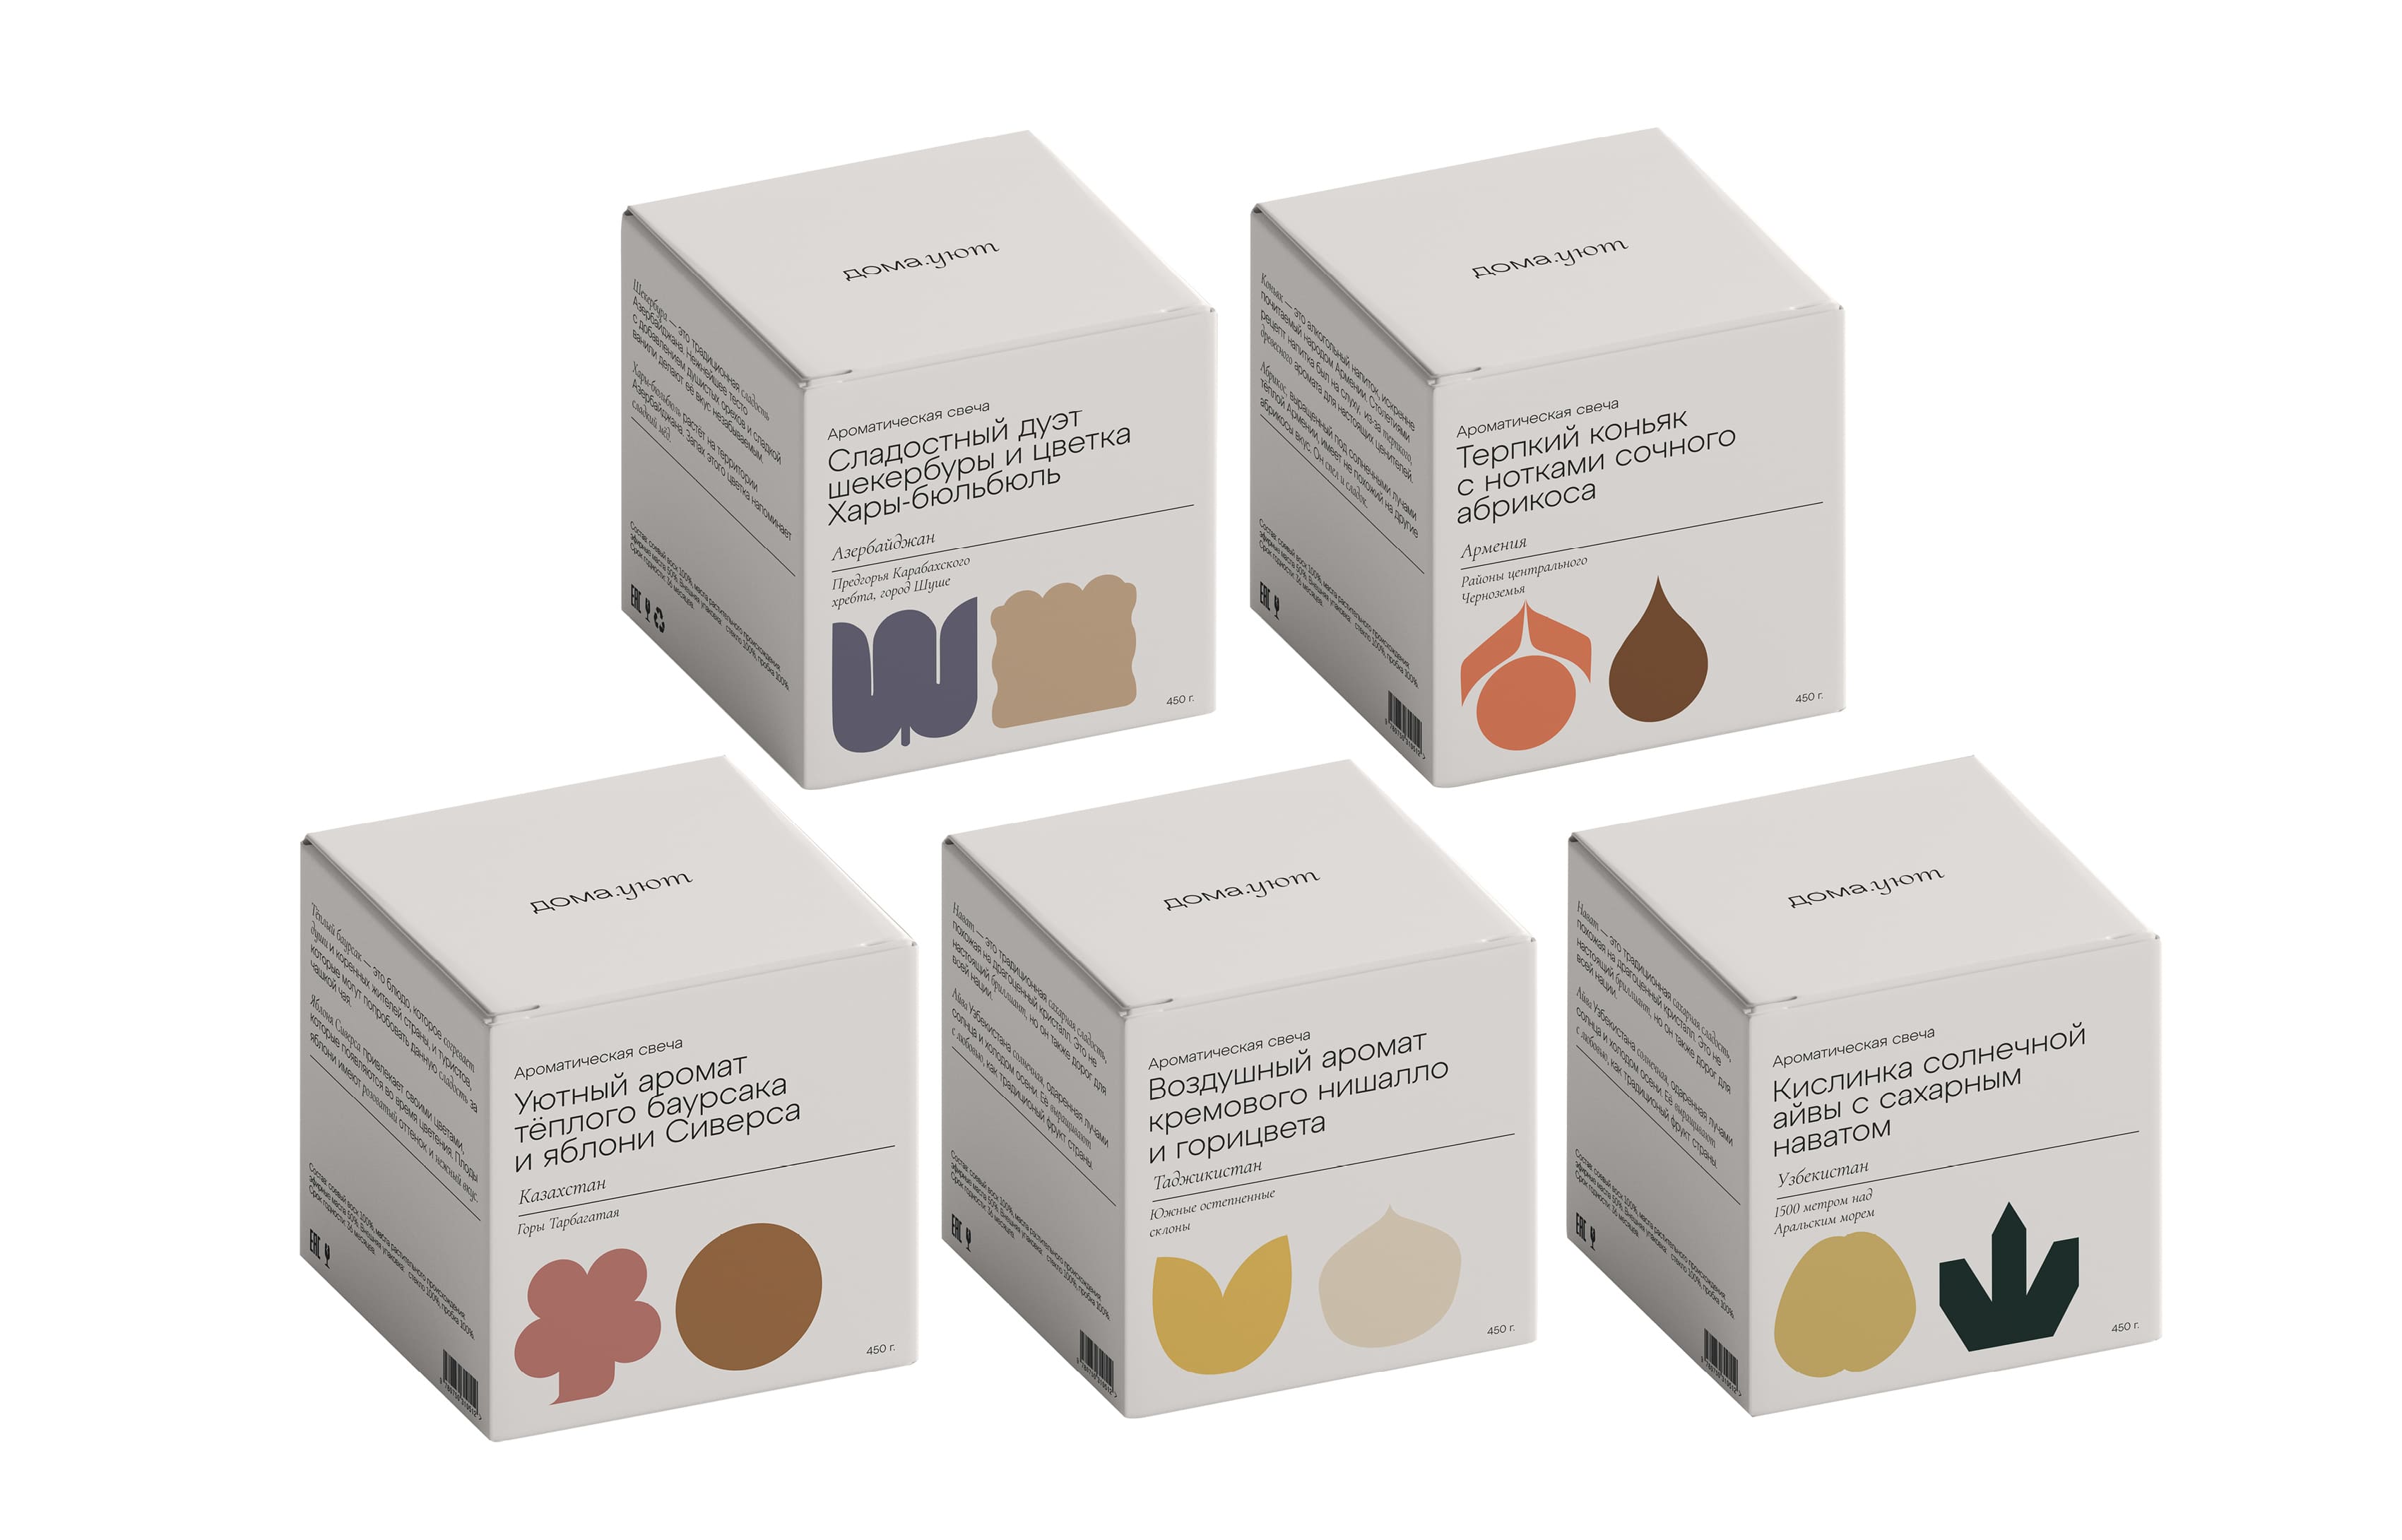 Fragrances for Home Student Packaging Design Concept